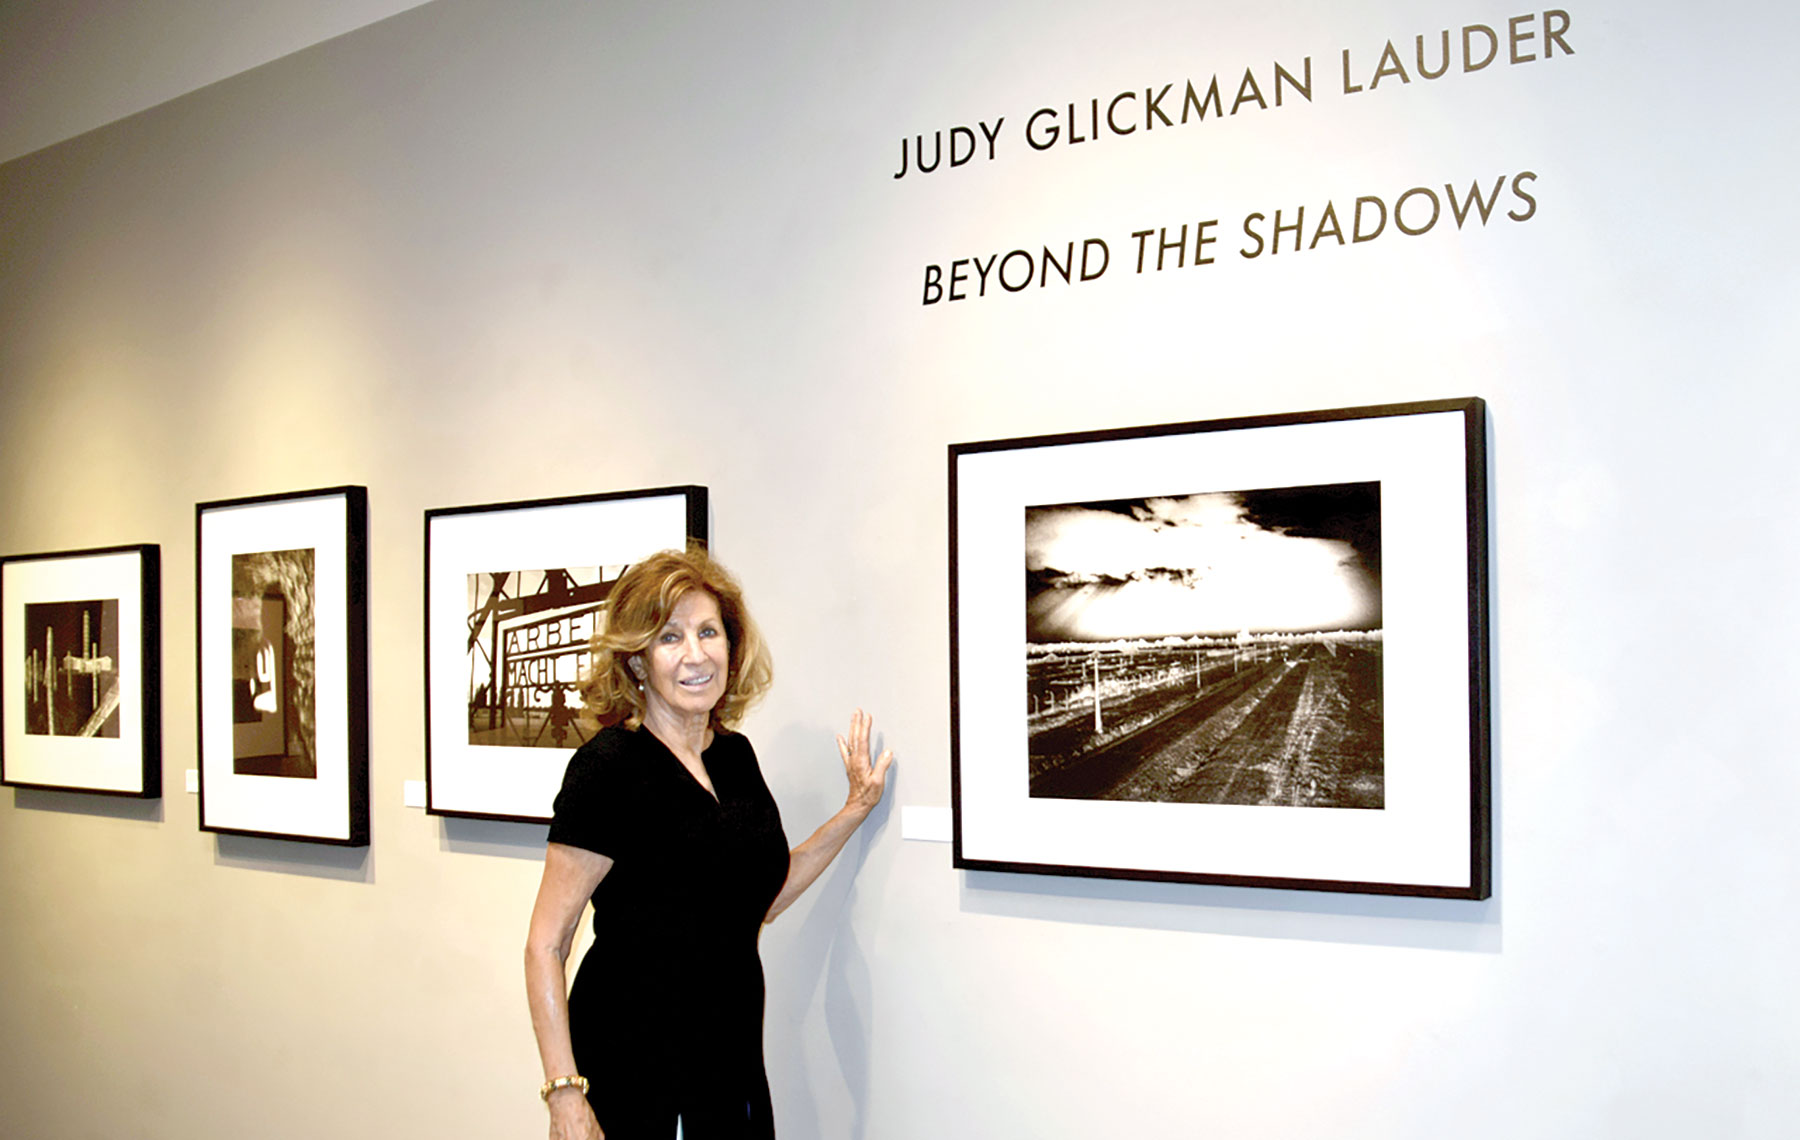 Estee Lauder chairman Leonard Lauder will marry Judith Glickman